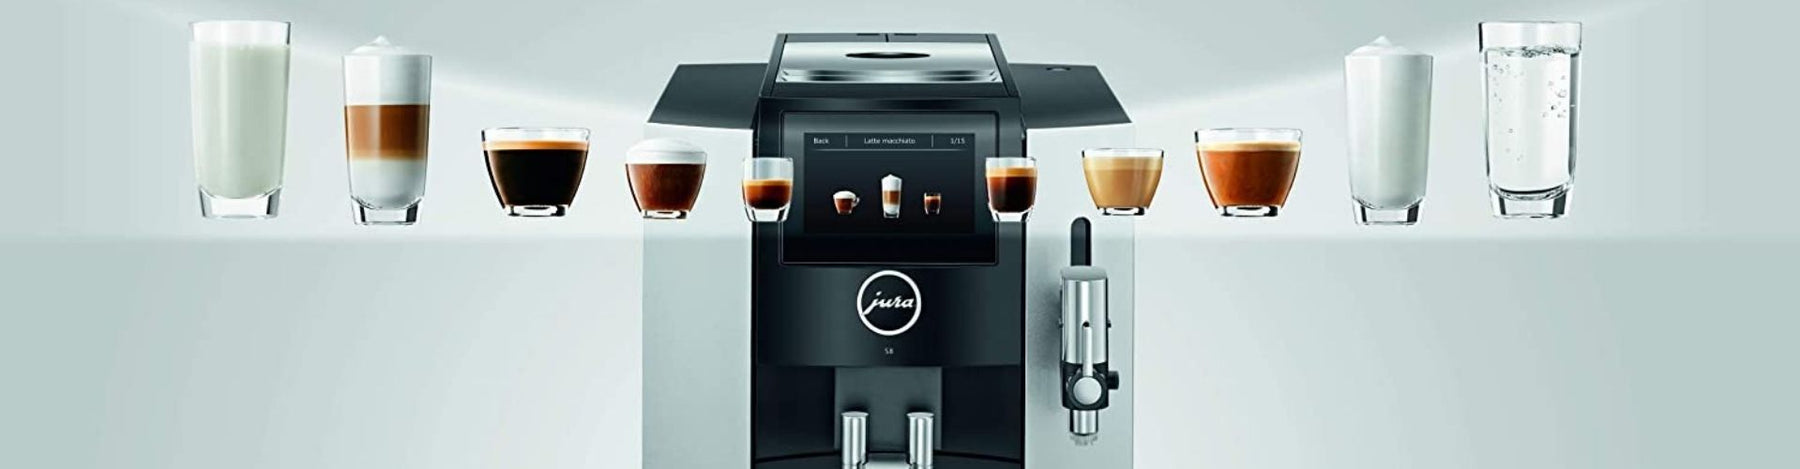 A Comprehensive Review of the Jura S8 Super Automatic Espresso Machine by Anthony's Espresso